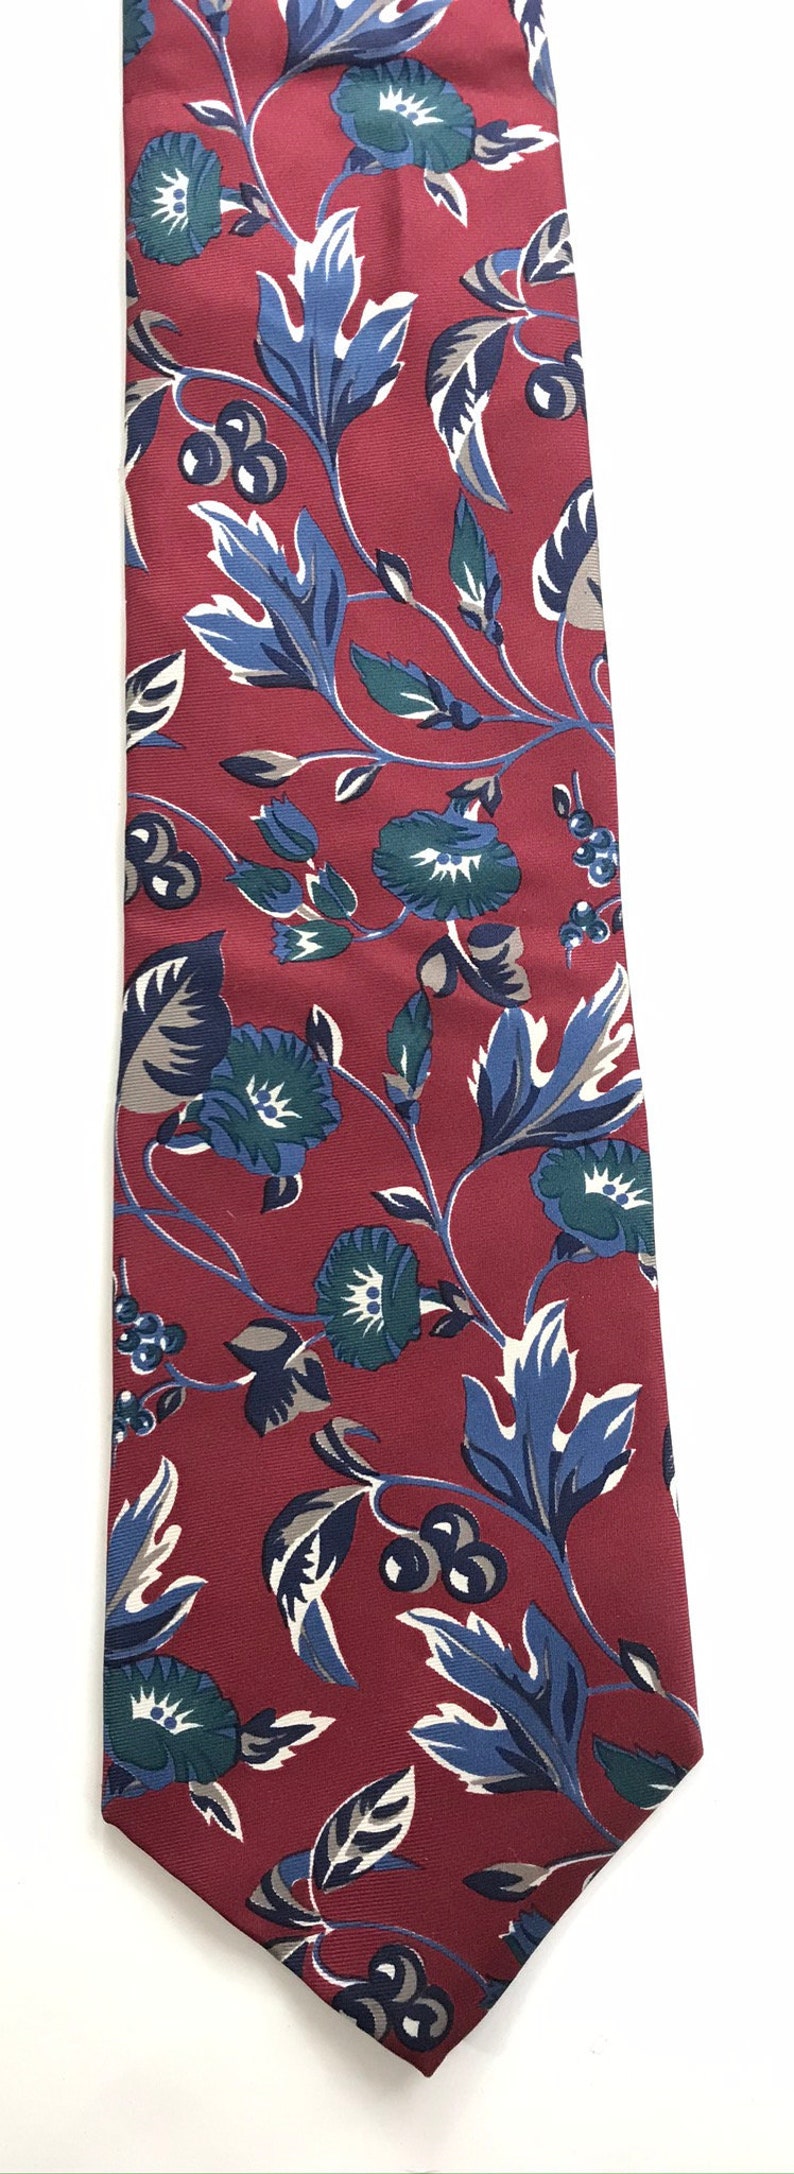 90s Red & Blue Floral Tie, Vintage Bert Pulitzer Tie, Floral Tie, Flowered Tie, Red Blue Necktie, Spring Summer Tie, 90s Tie image 2